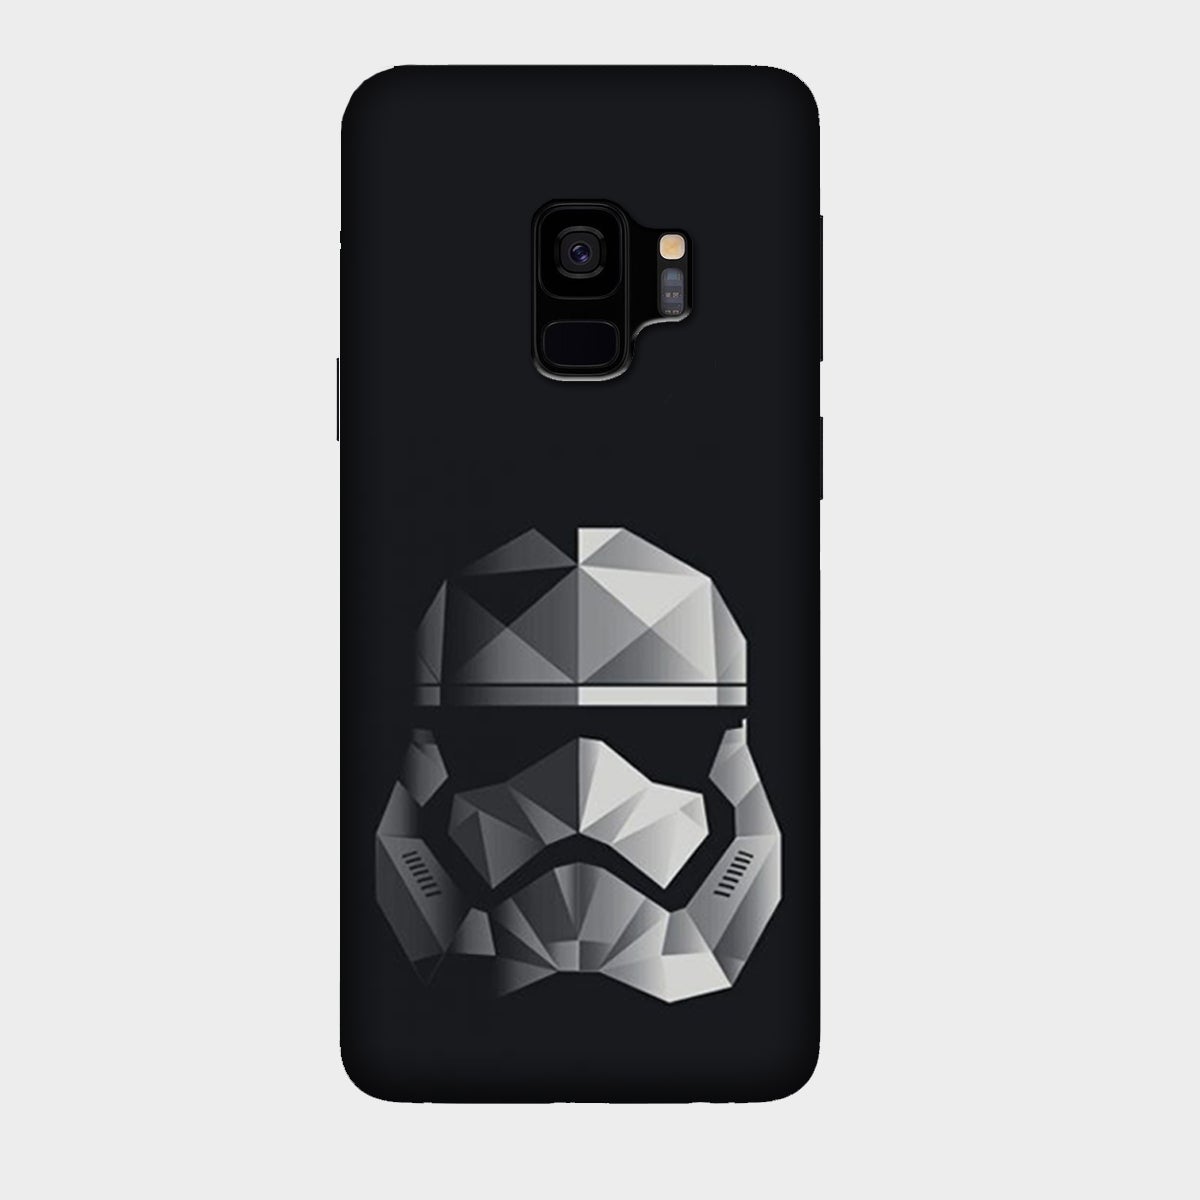 Star Wars - Darth Vader - Mobile Phone Cover - Hard Case - Samsung - Samsung